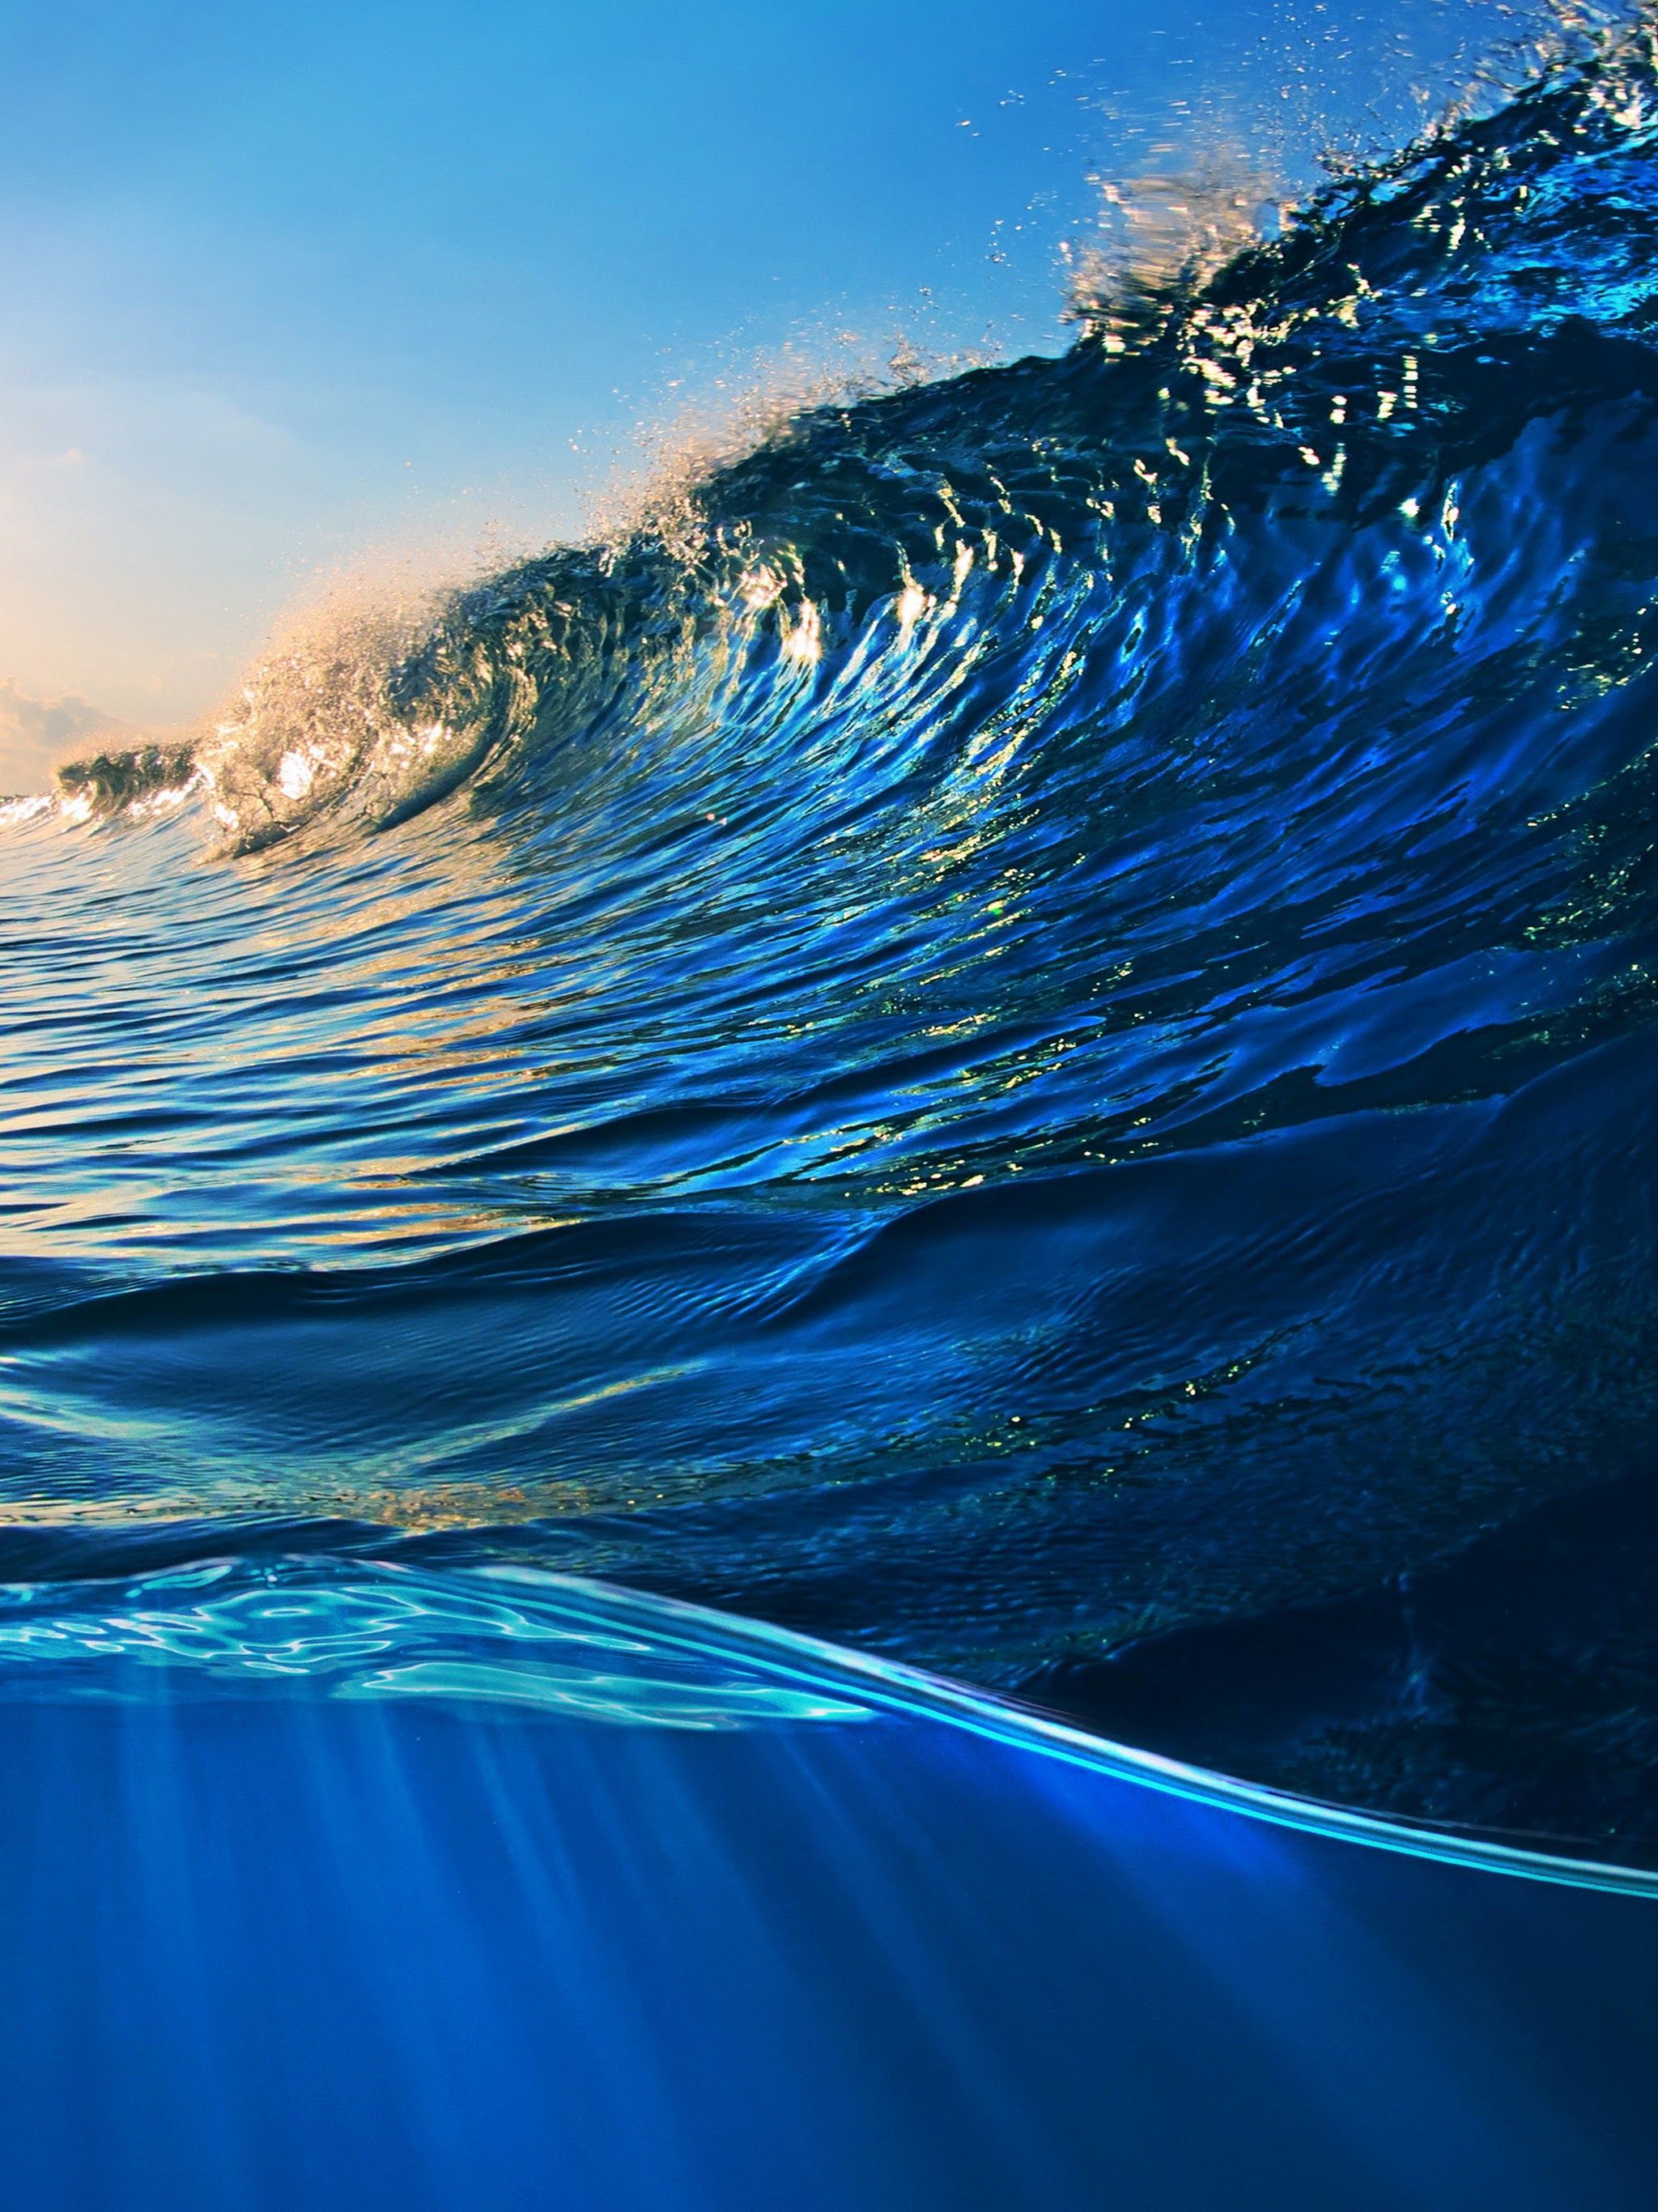 Ocean Waves Sunlight Scenery 4K Wallpaper